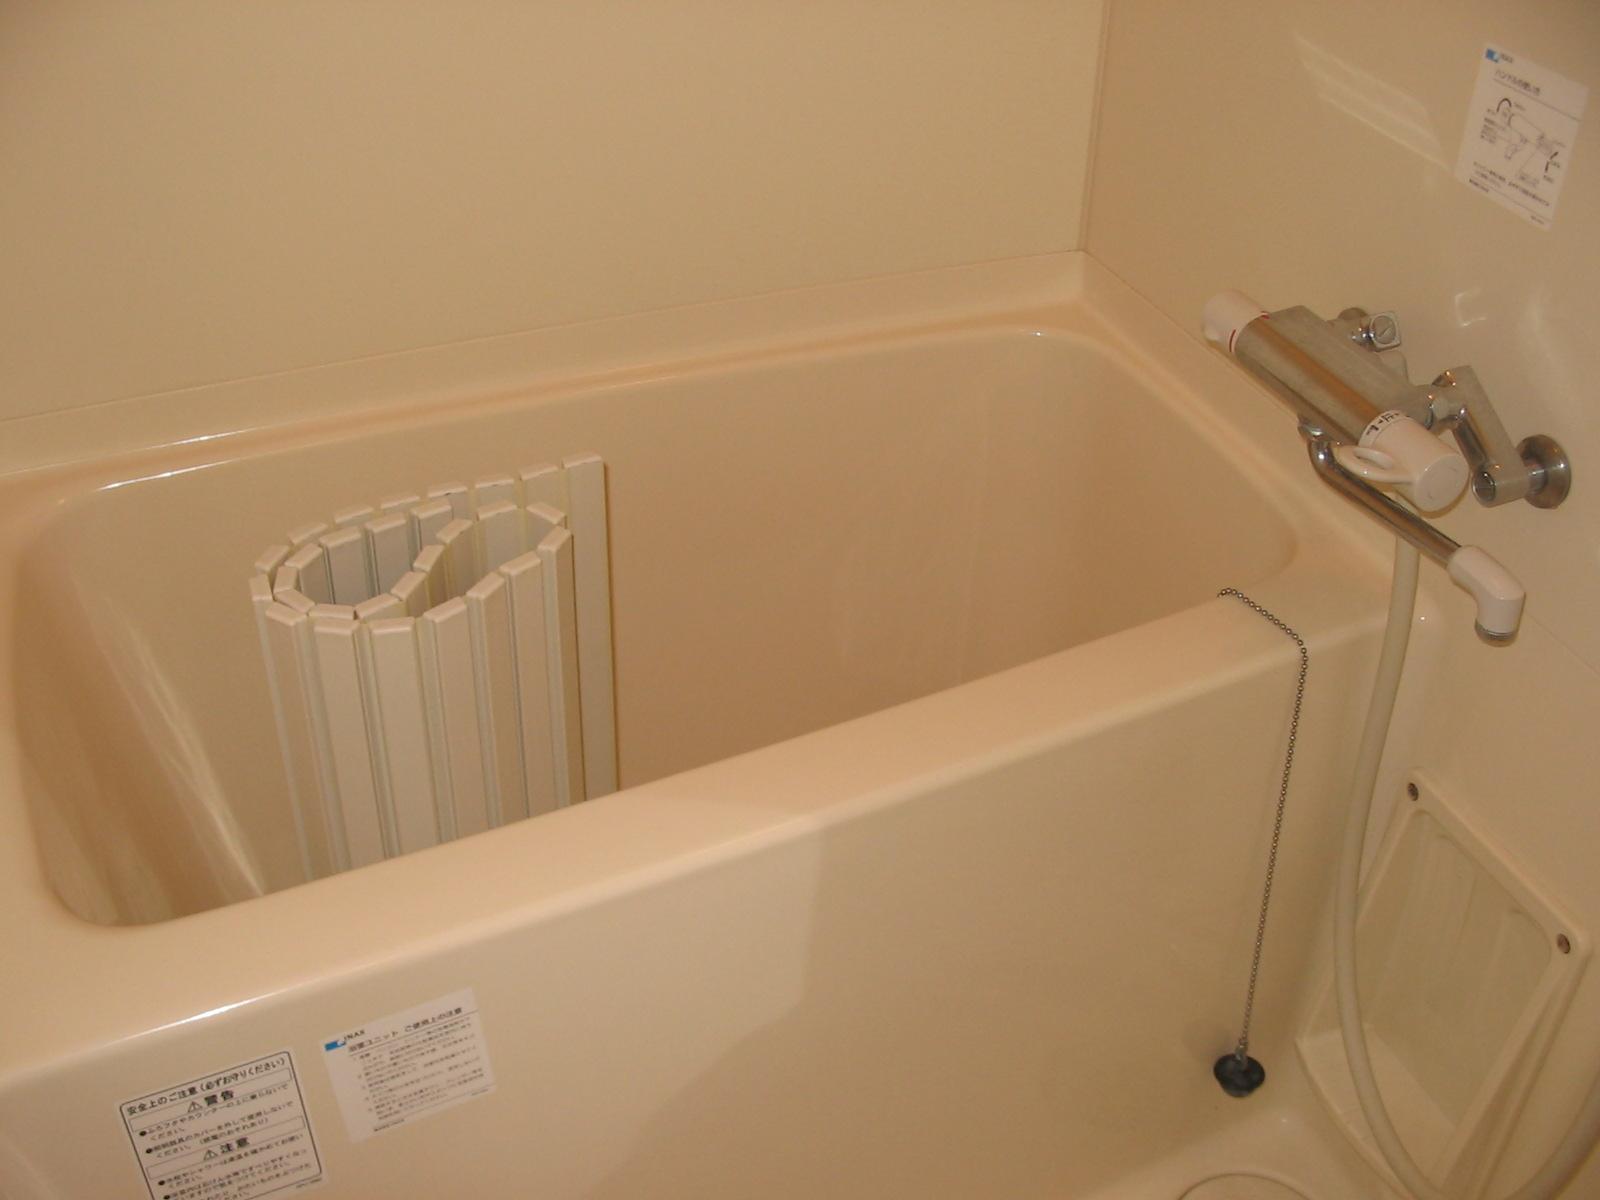 Bath. Bathroom ventilation dryer